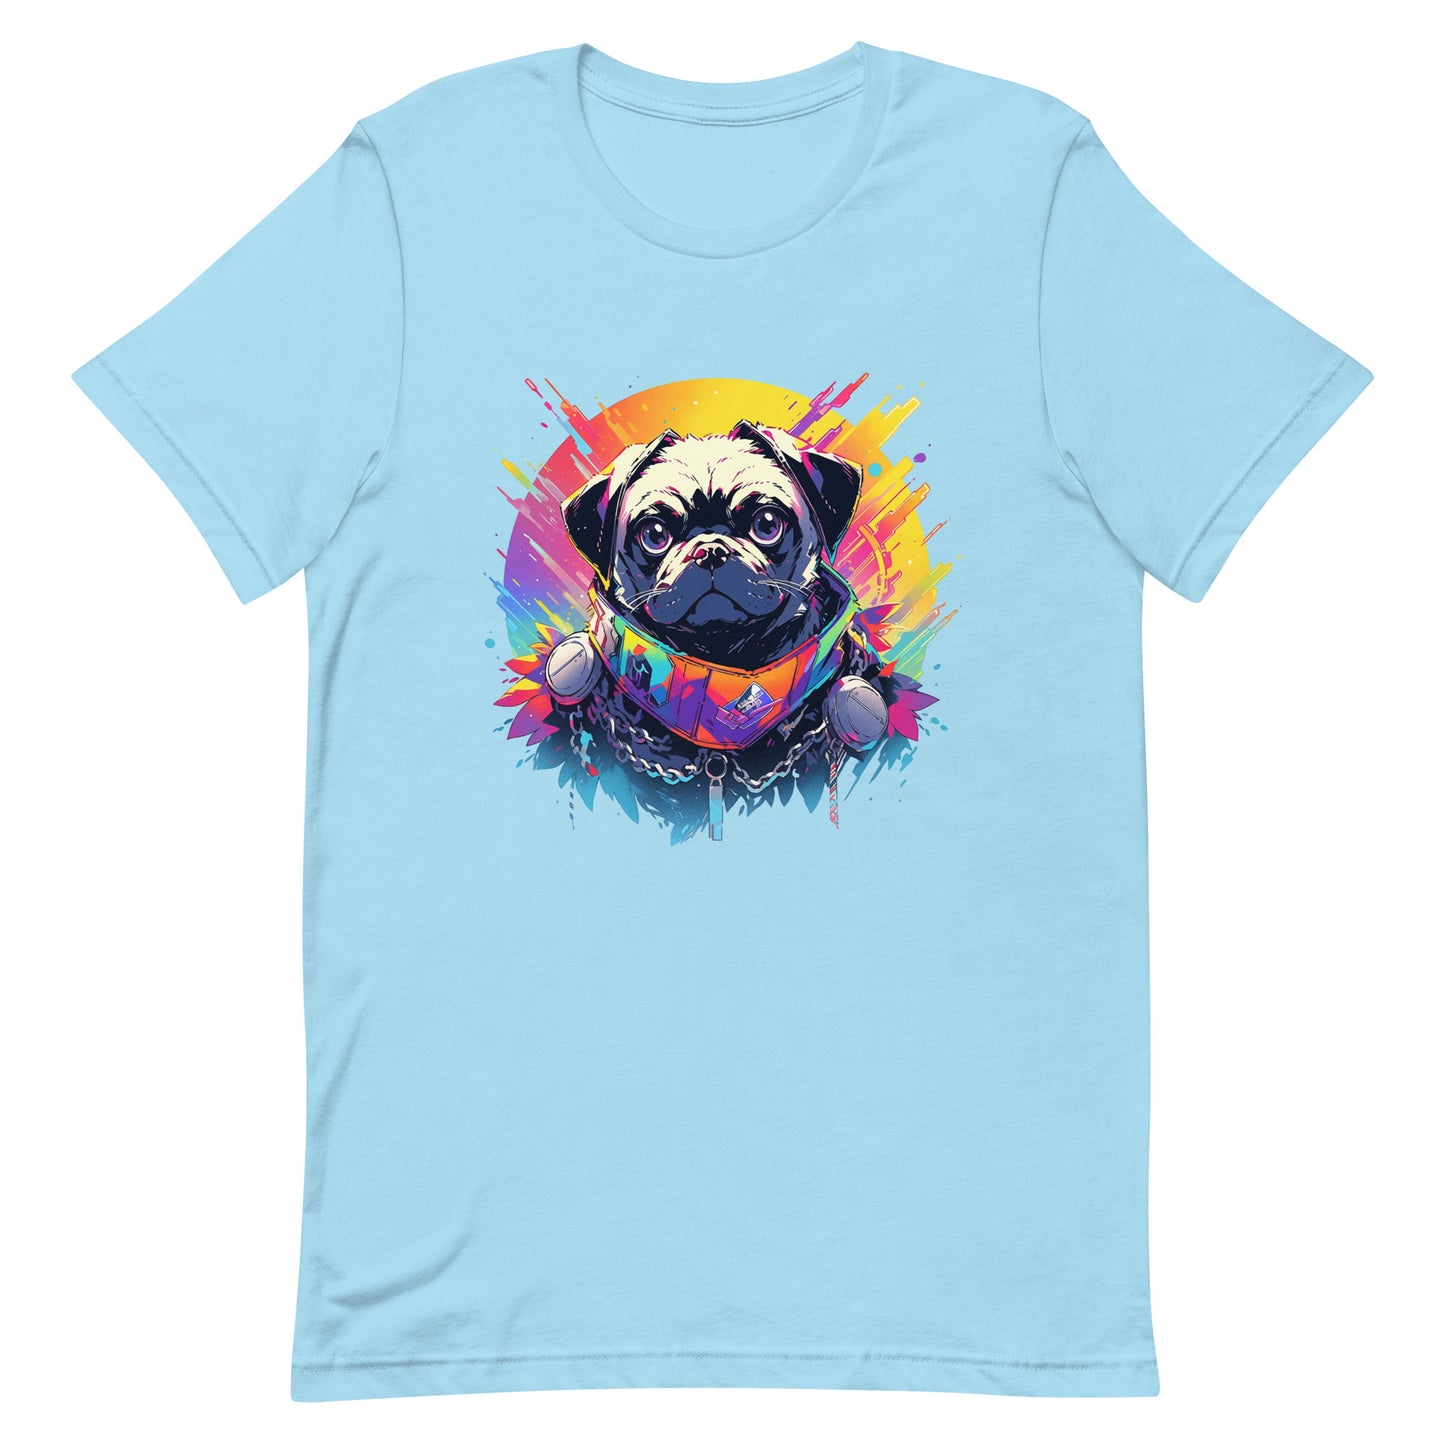 Funny fantasy pug, Doggy punk, Pet animals, Pop Art pug illustration, Pug rocker - Unisex t-shirt